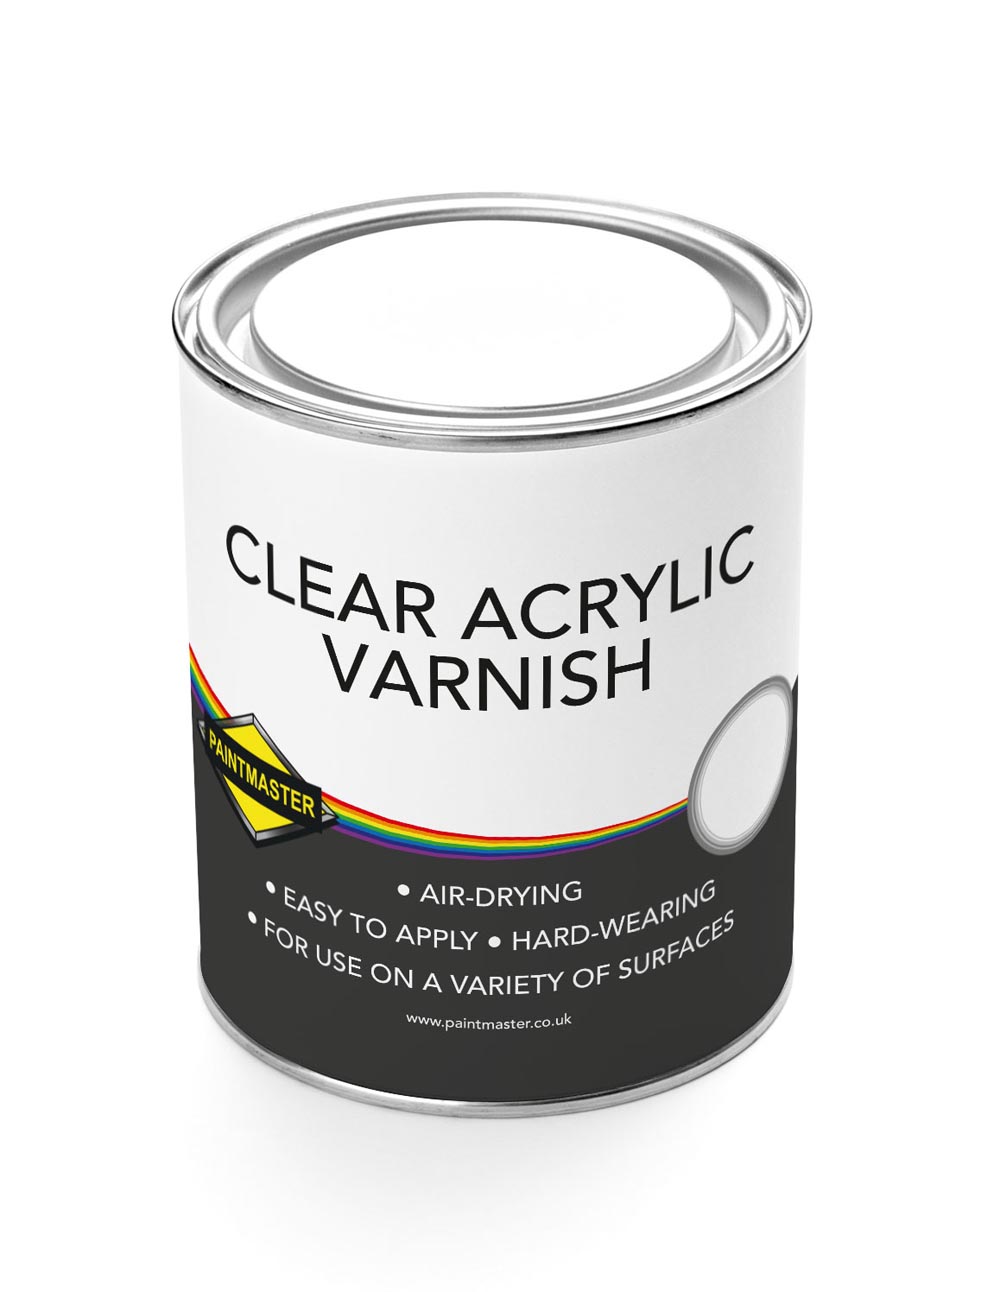 Clear Acrylic Varnish - Paintmaster